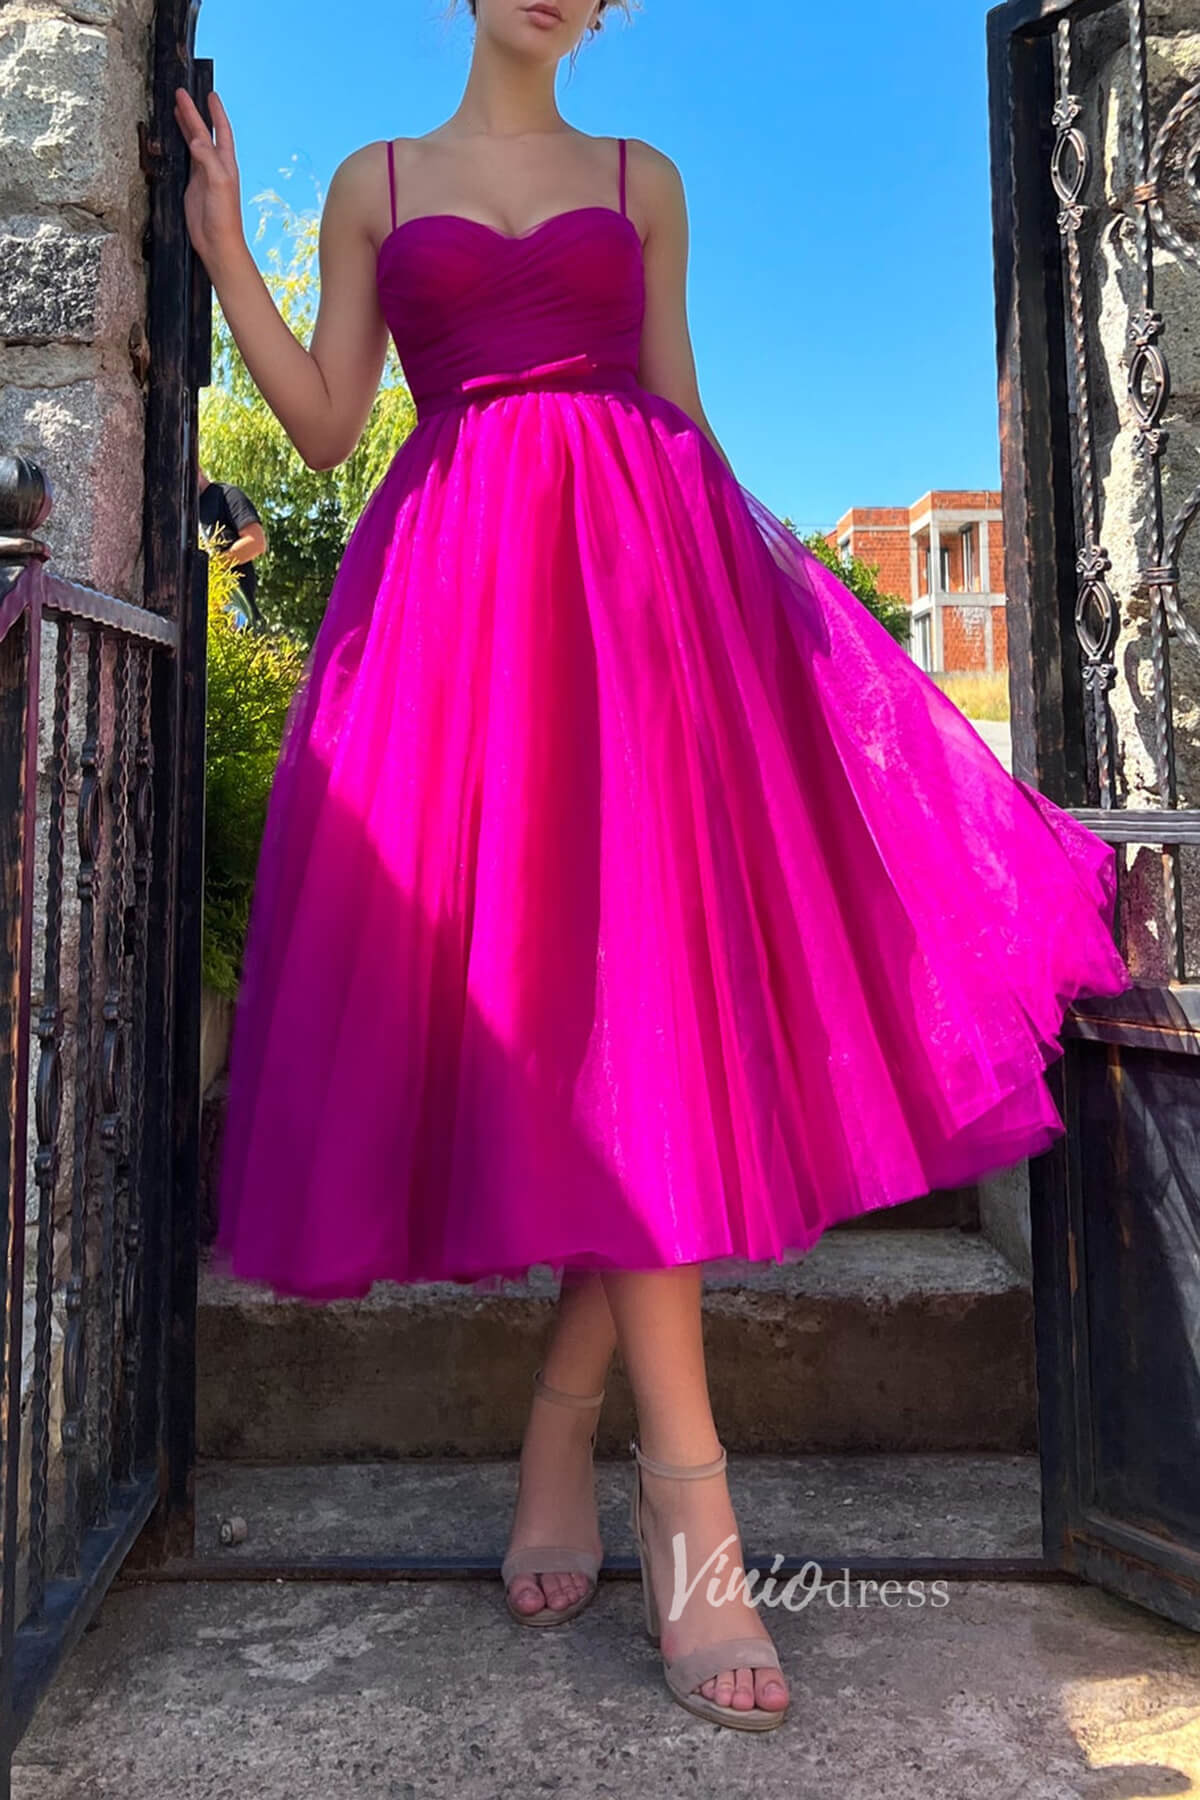 Fuchsia Midi Length Prom Dresses Tulle Spaghetti Strap Homecoming Dress FD2985-prom dresses-Viniodress-Viniodress